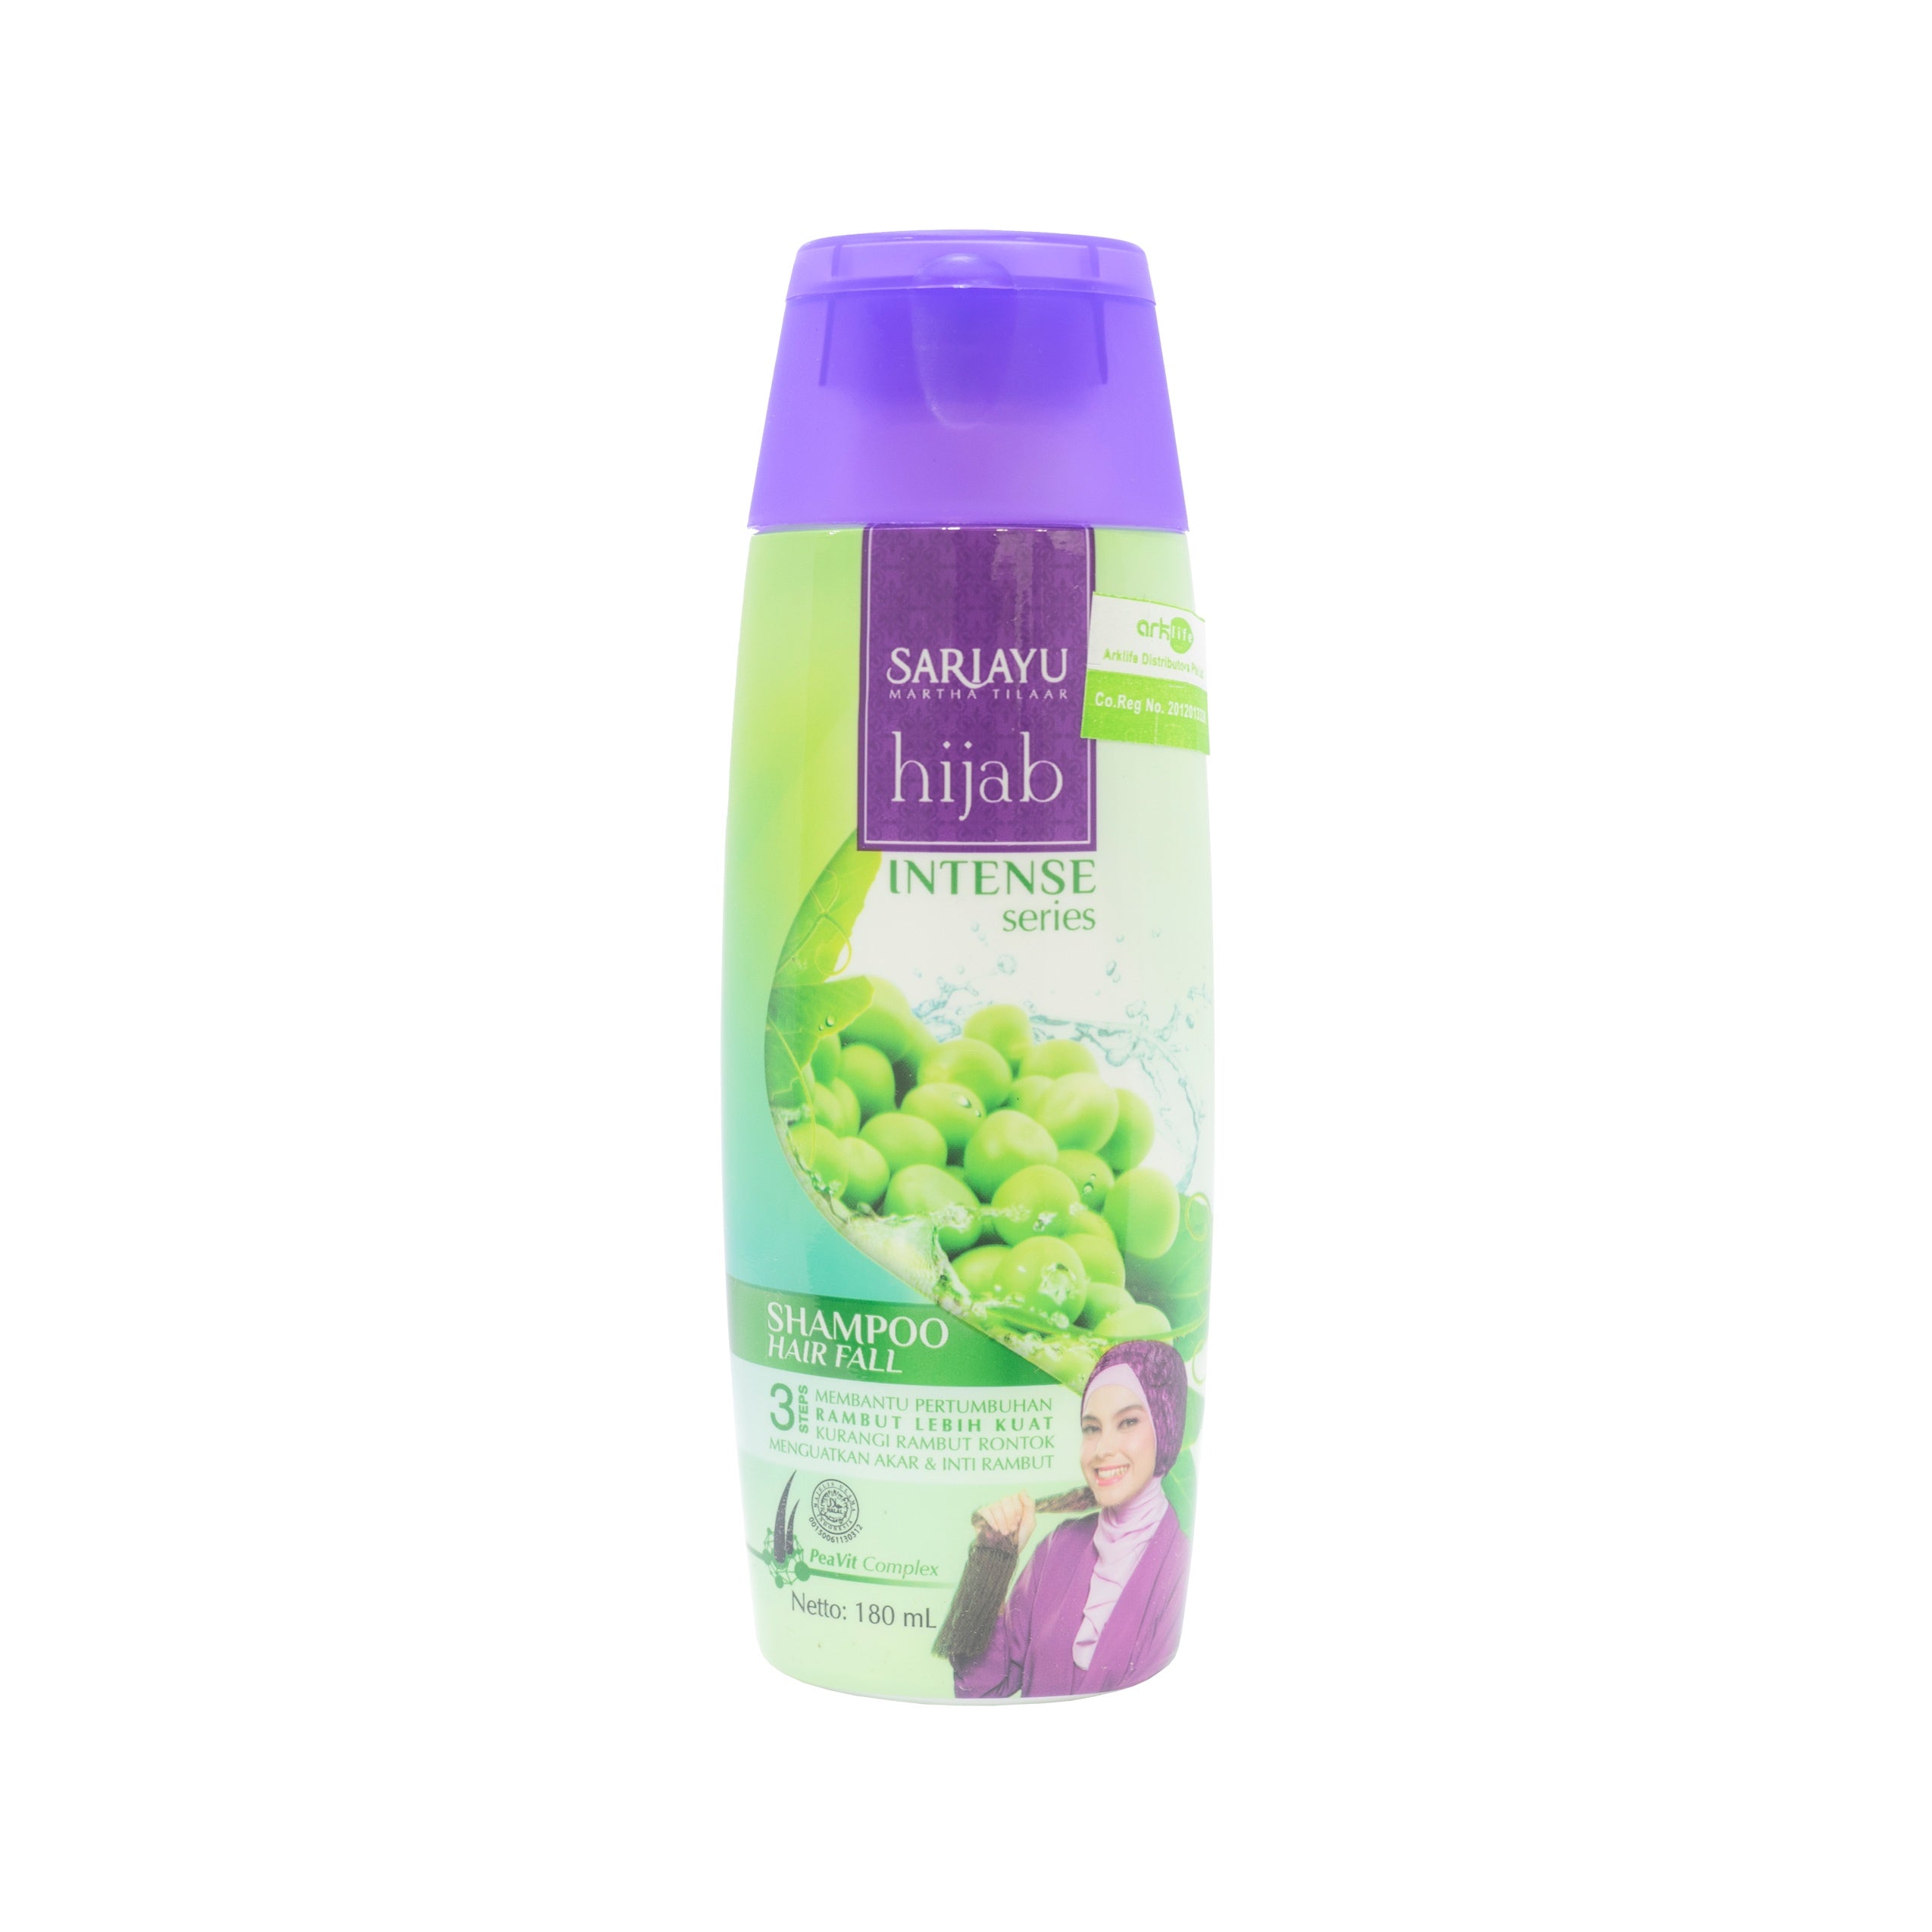 Sariayu, Hijab Intense Series Hair Fall Shampoo, 180 ml